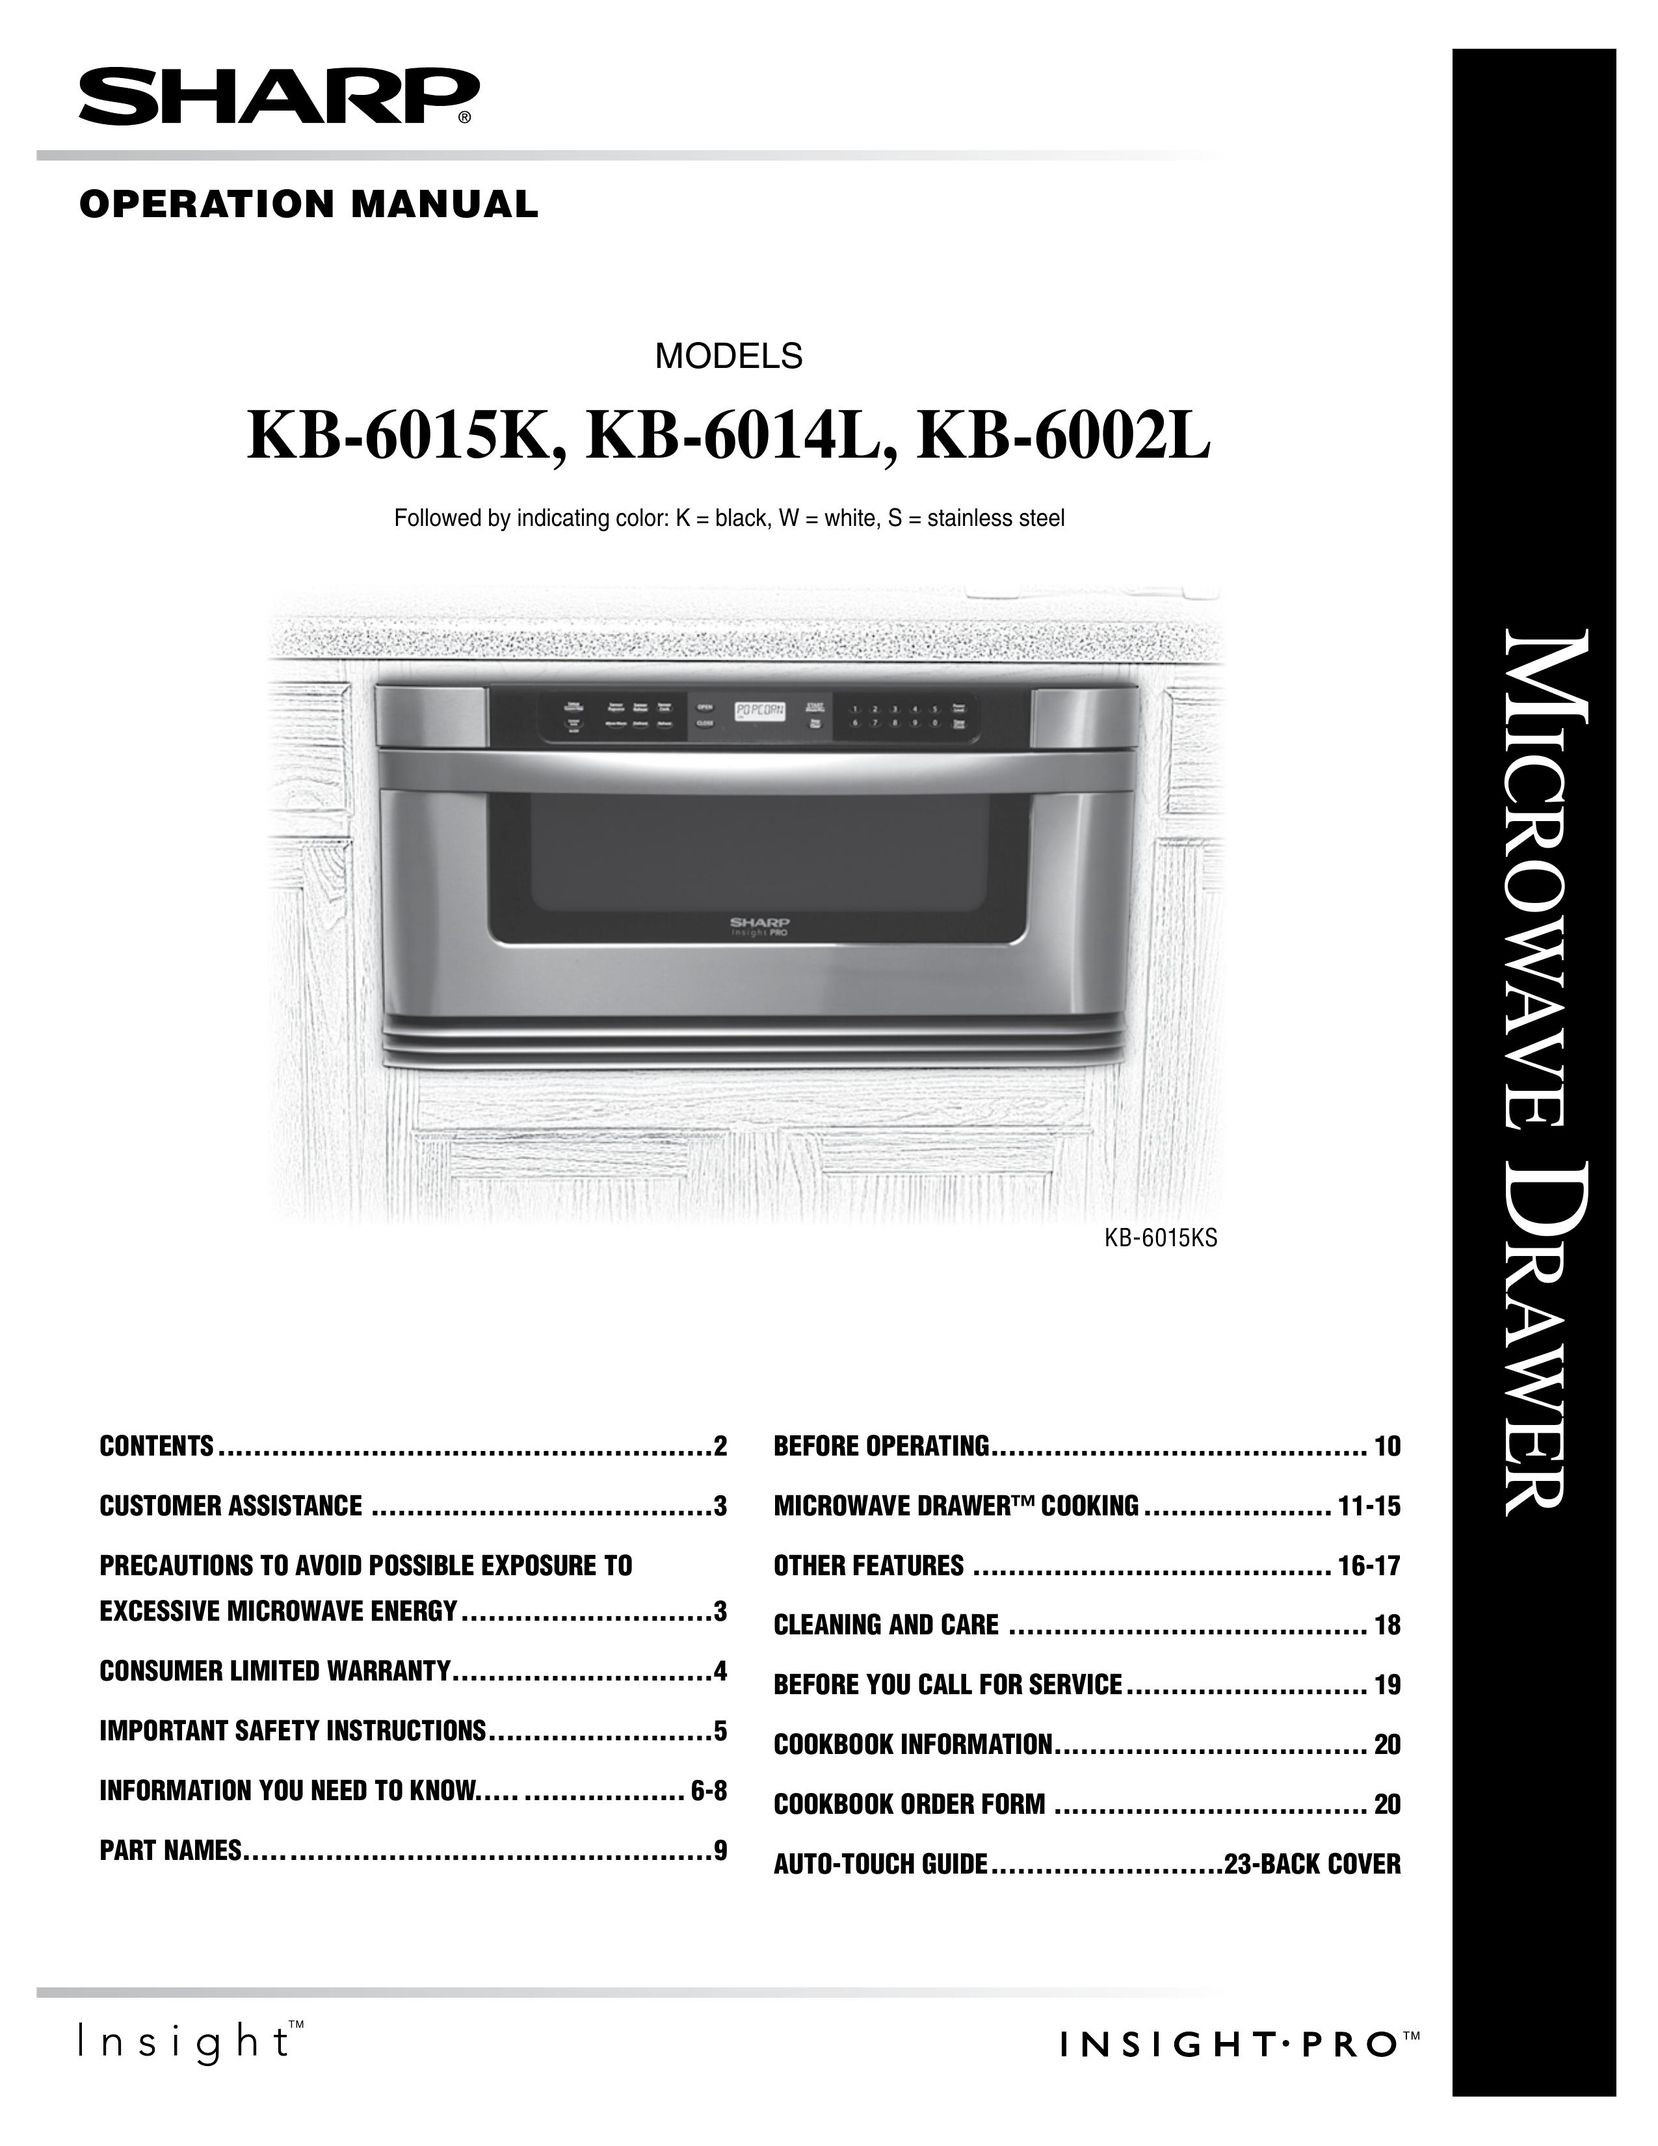 Sharp KB6002LS Microwave Oven User Manual